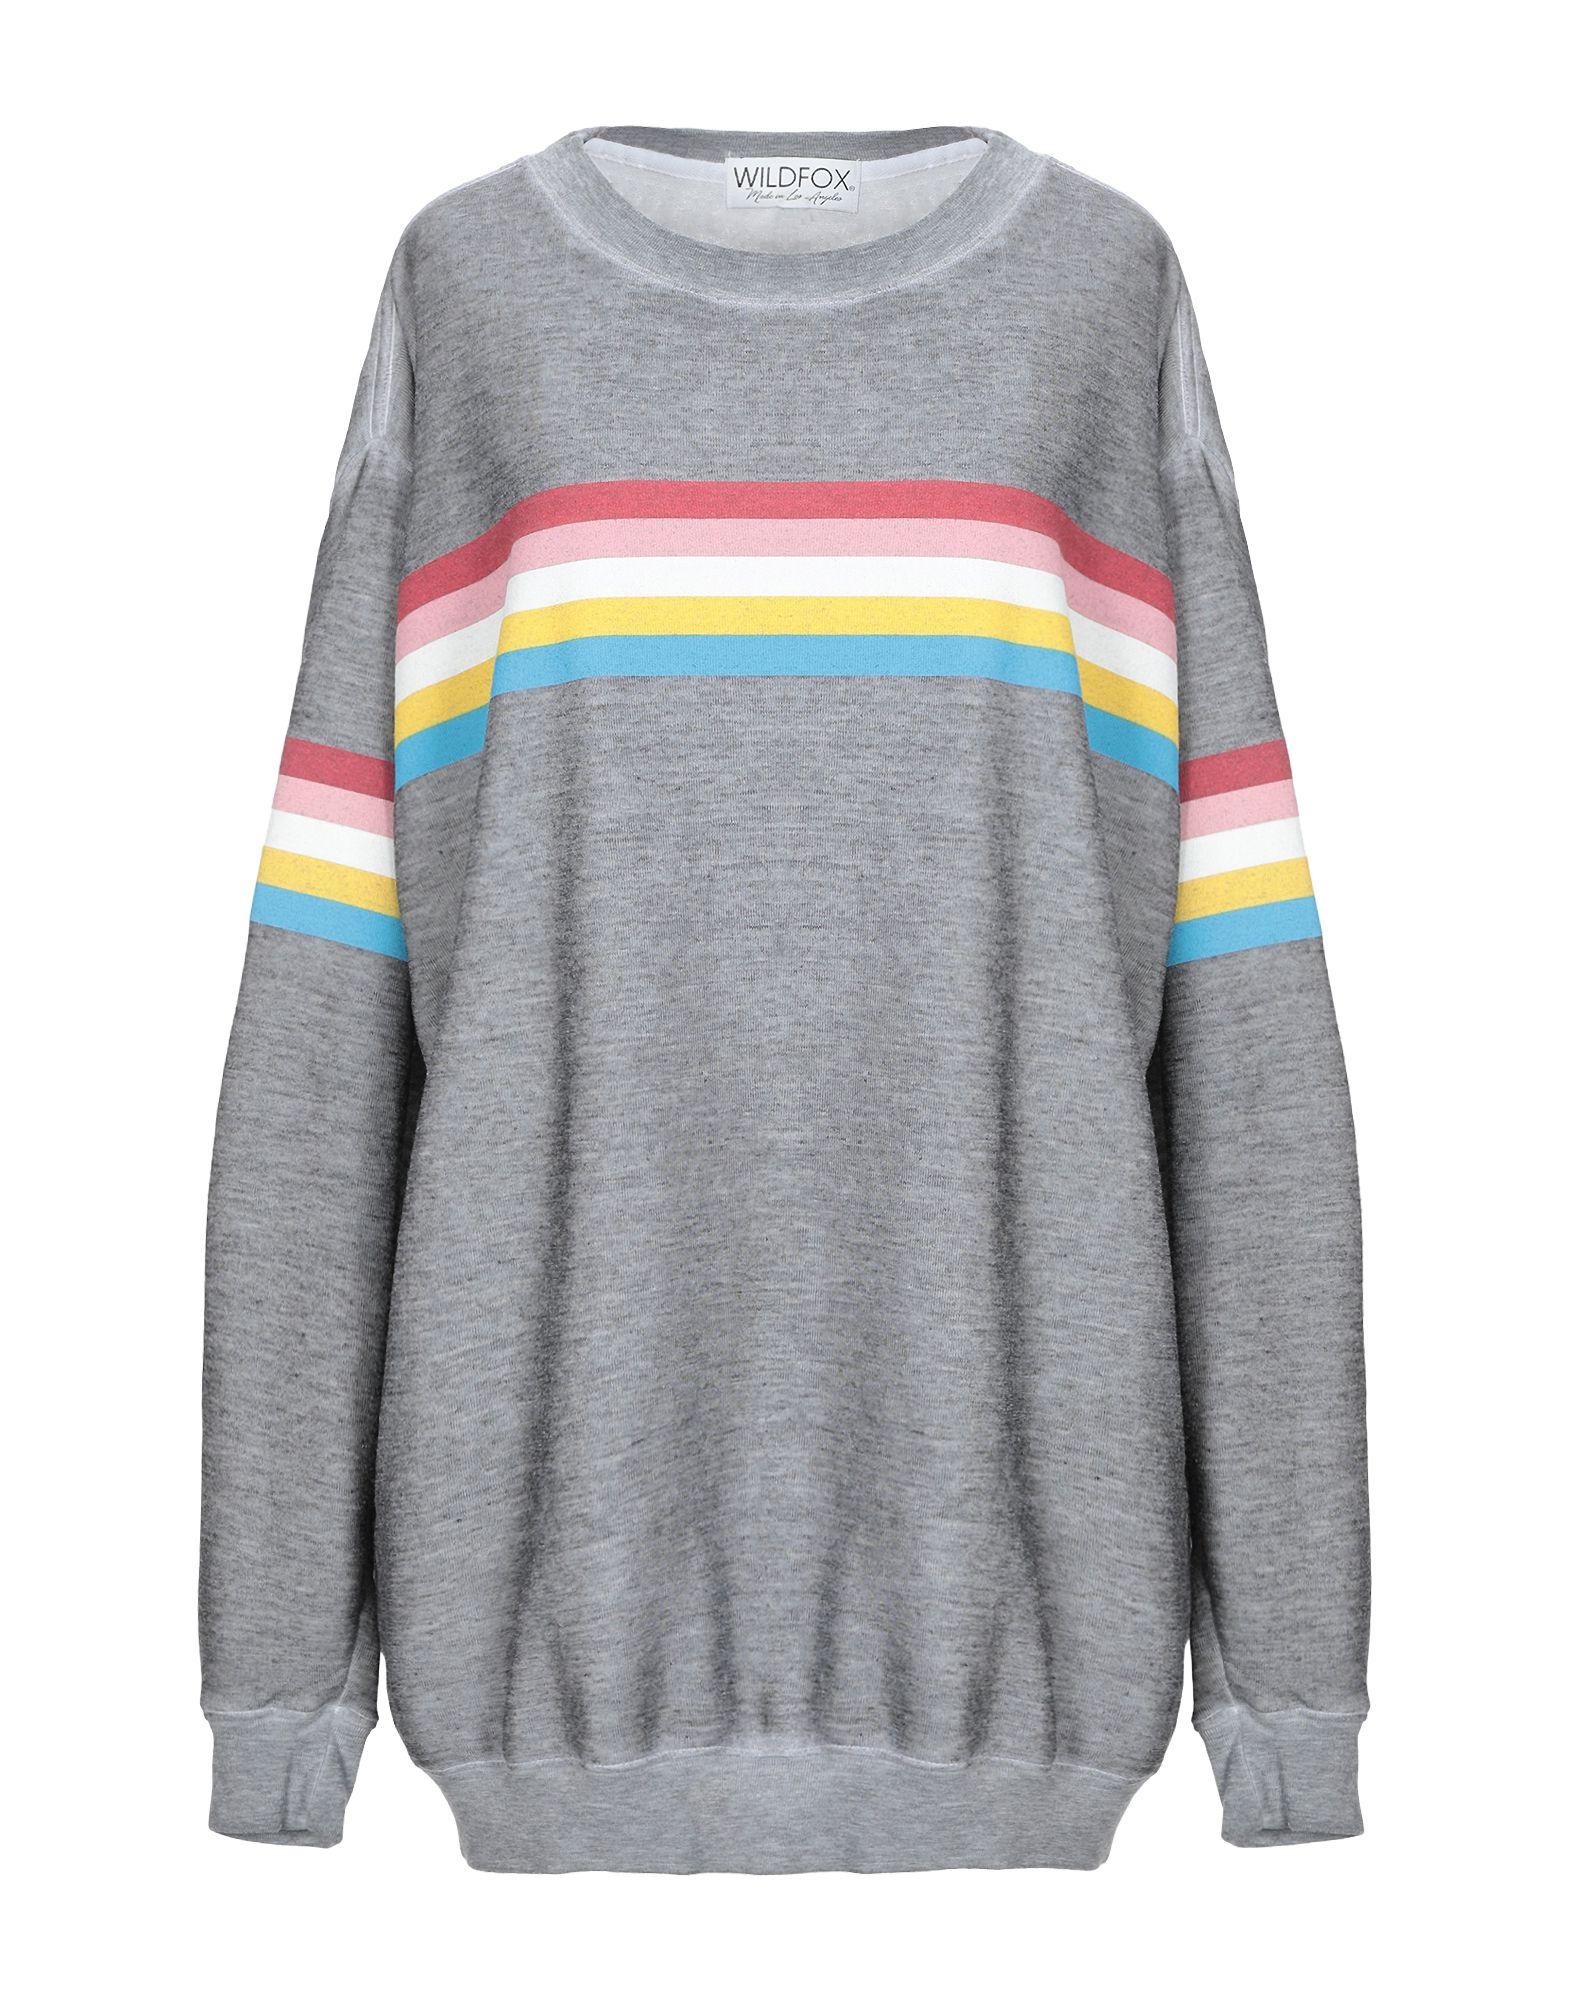 Lyst - Wildfox Sweatshirt in Gray